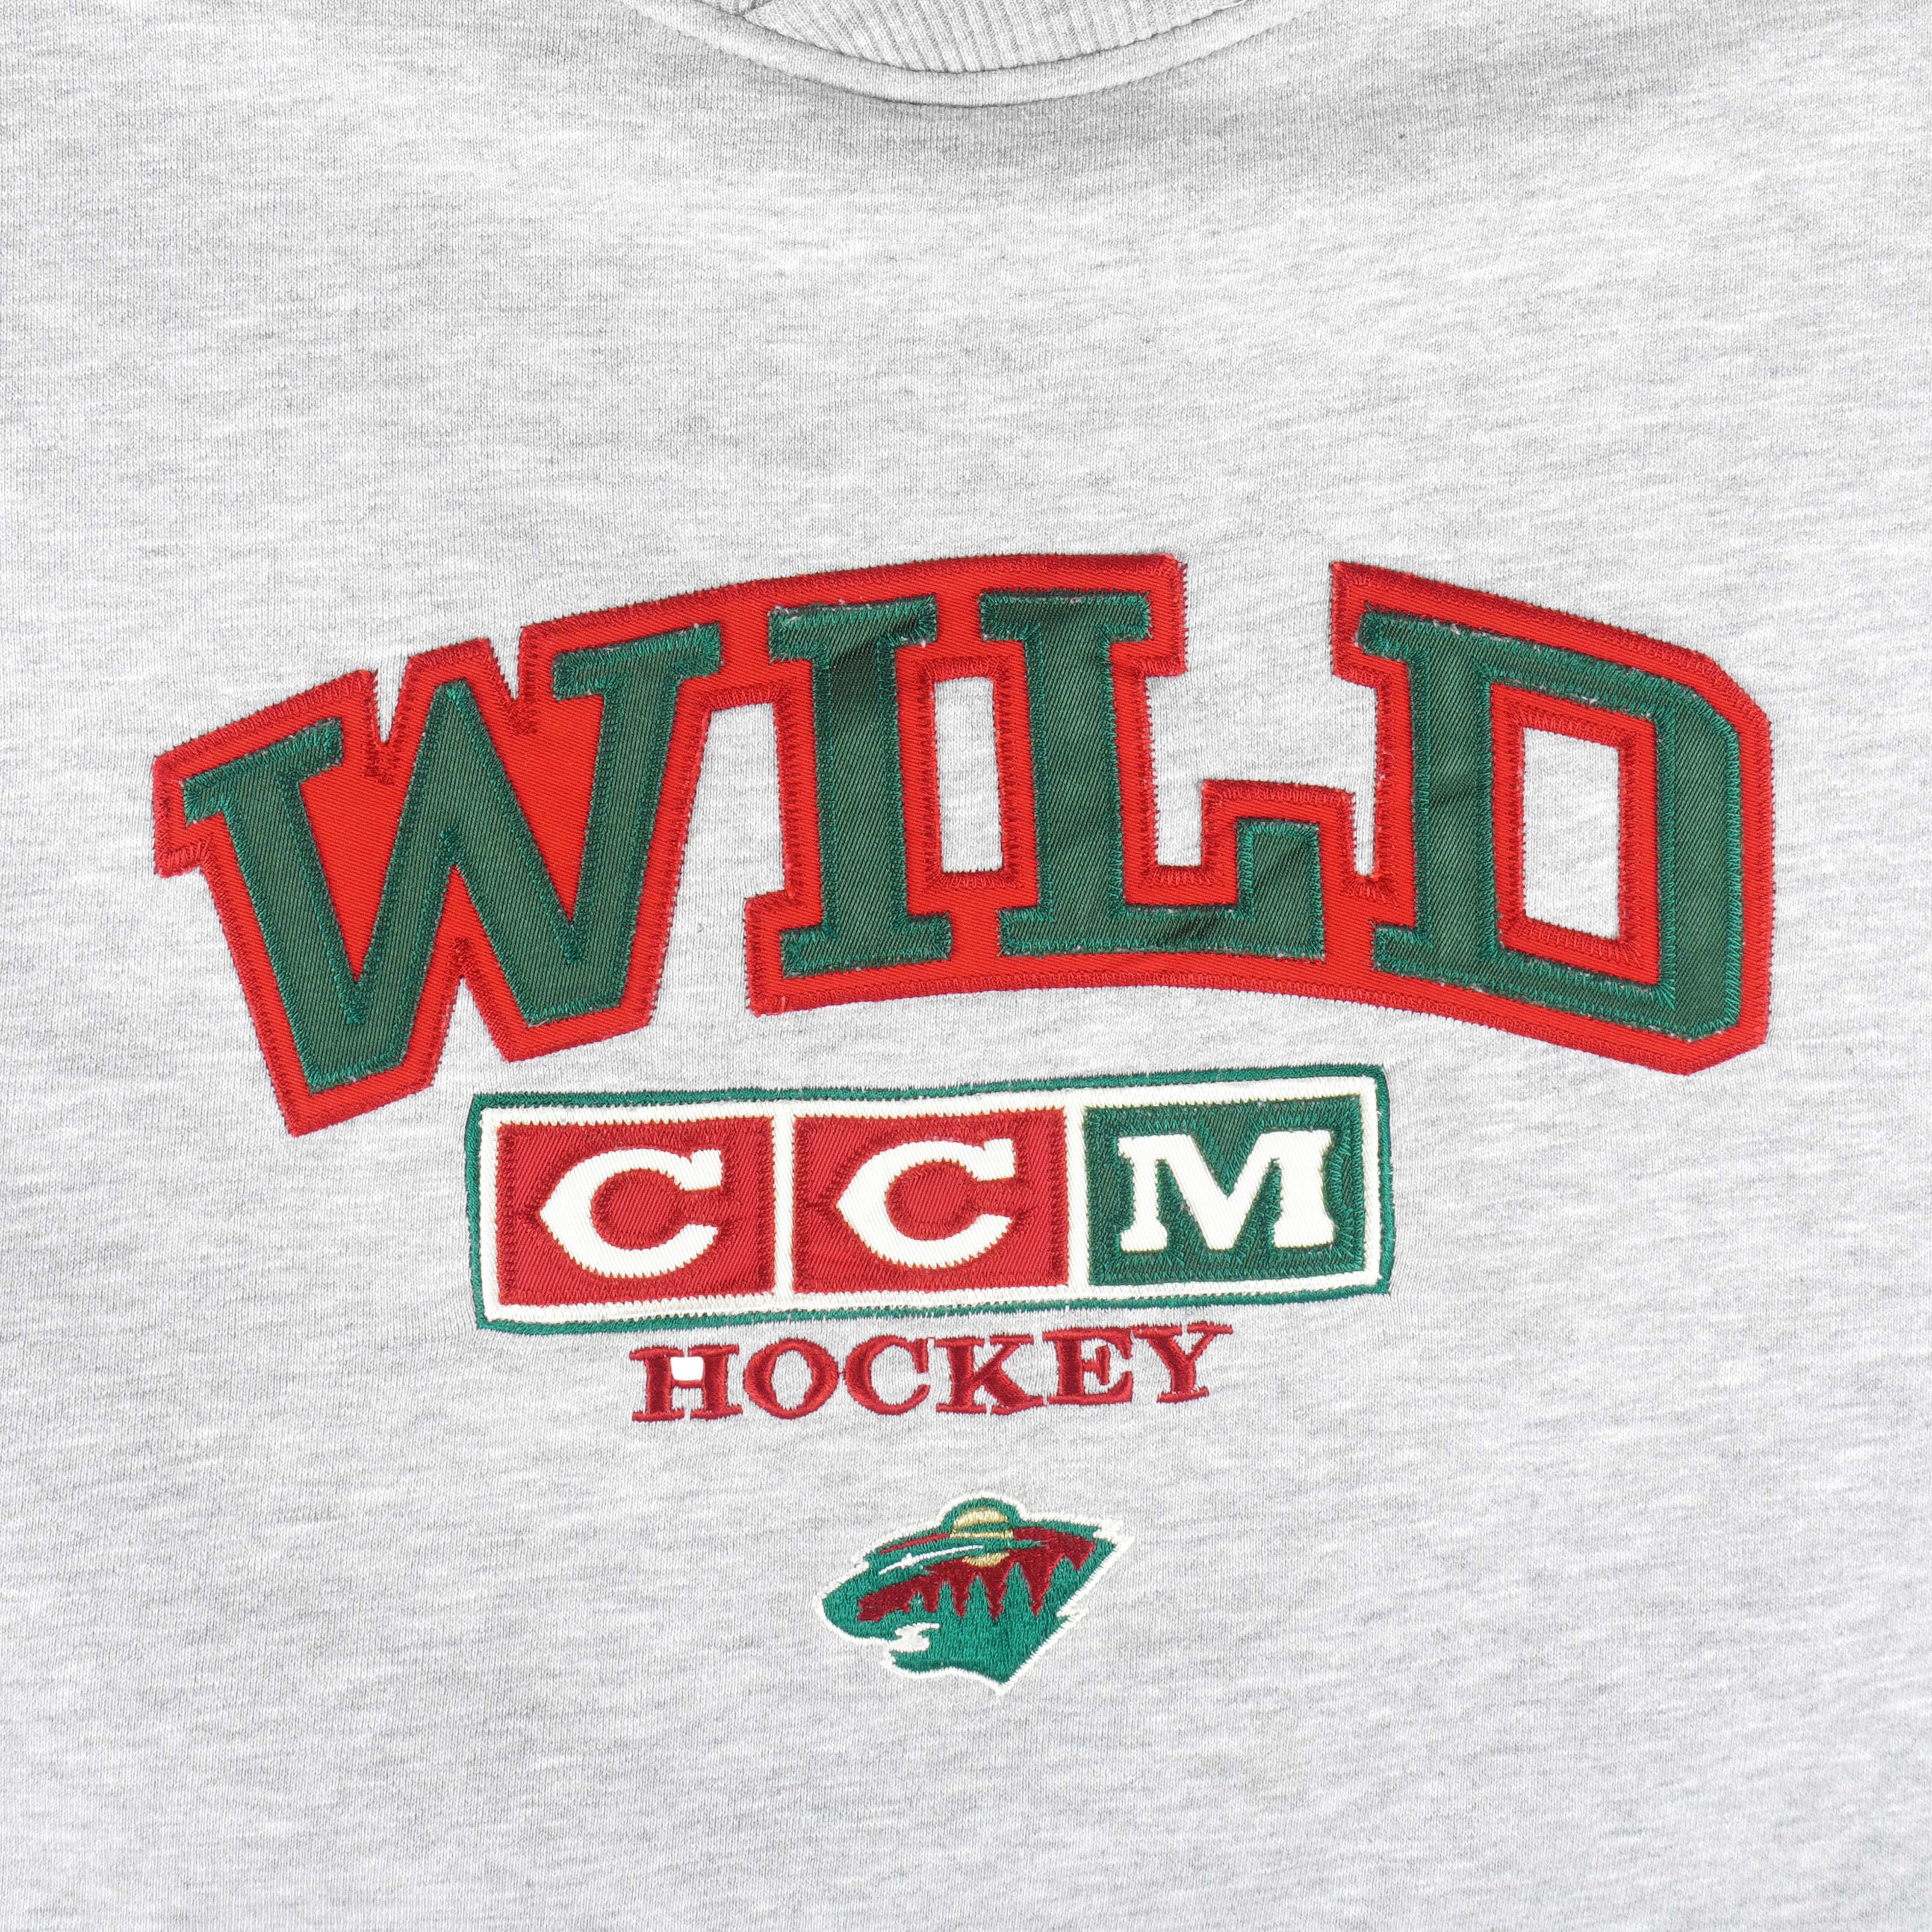 CCM Minnesota Wild NHL Fan Shop